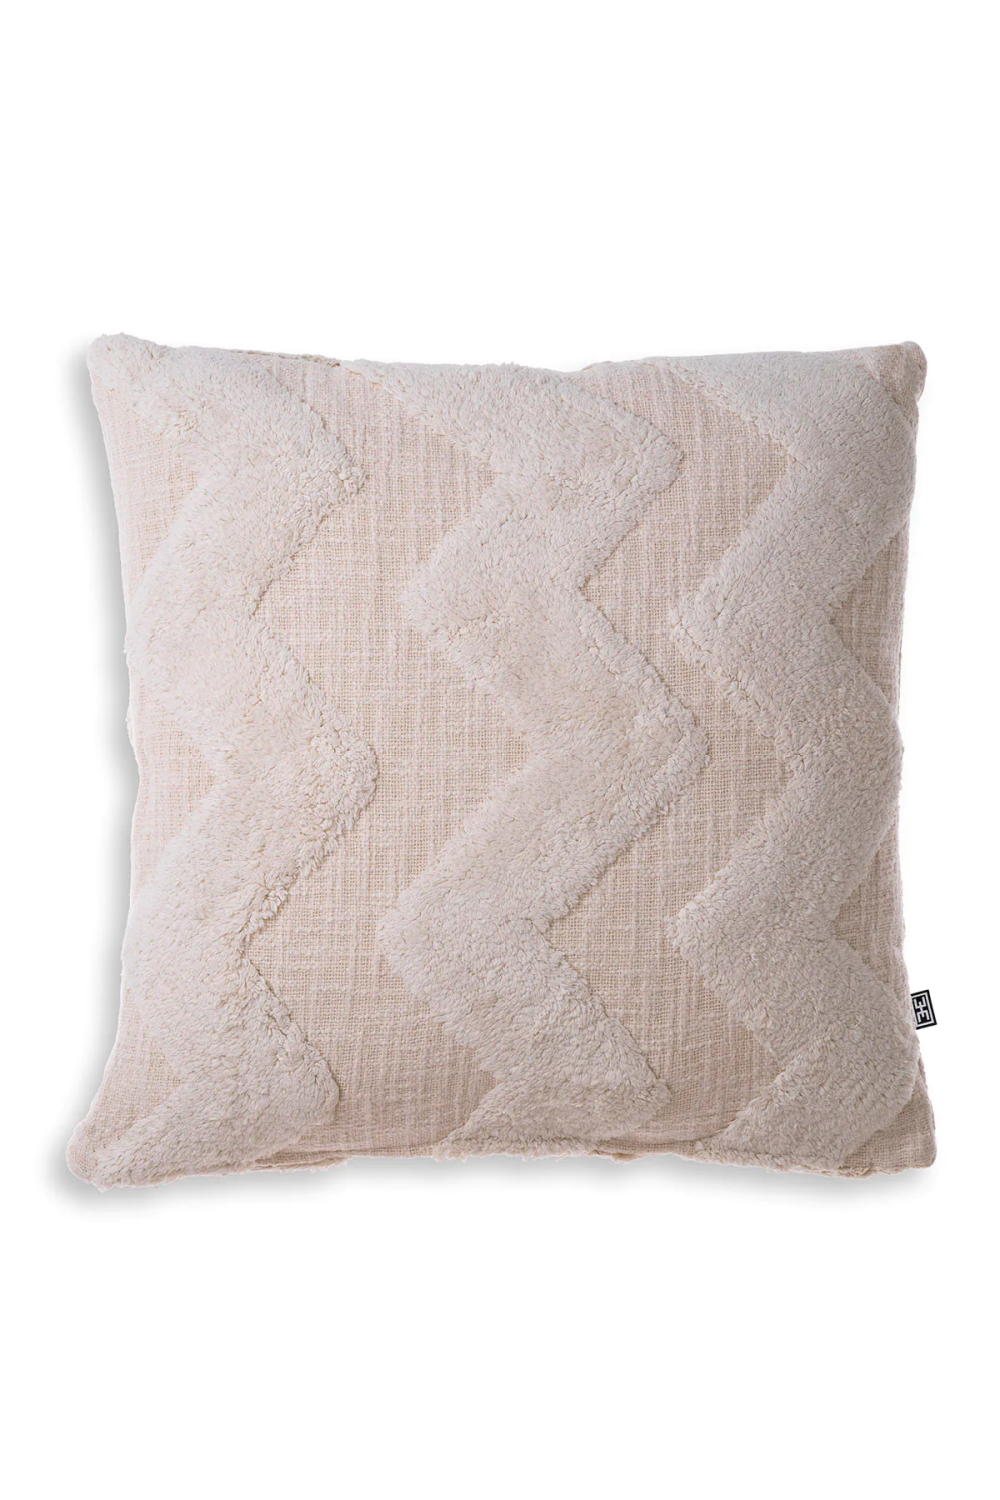 Off-White Zigzag Patterned Cushion L | Eichholtz Mynos | Oroa.com